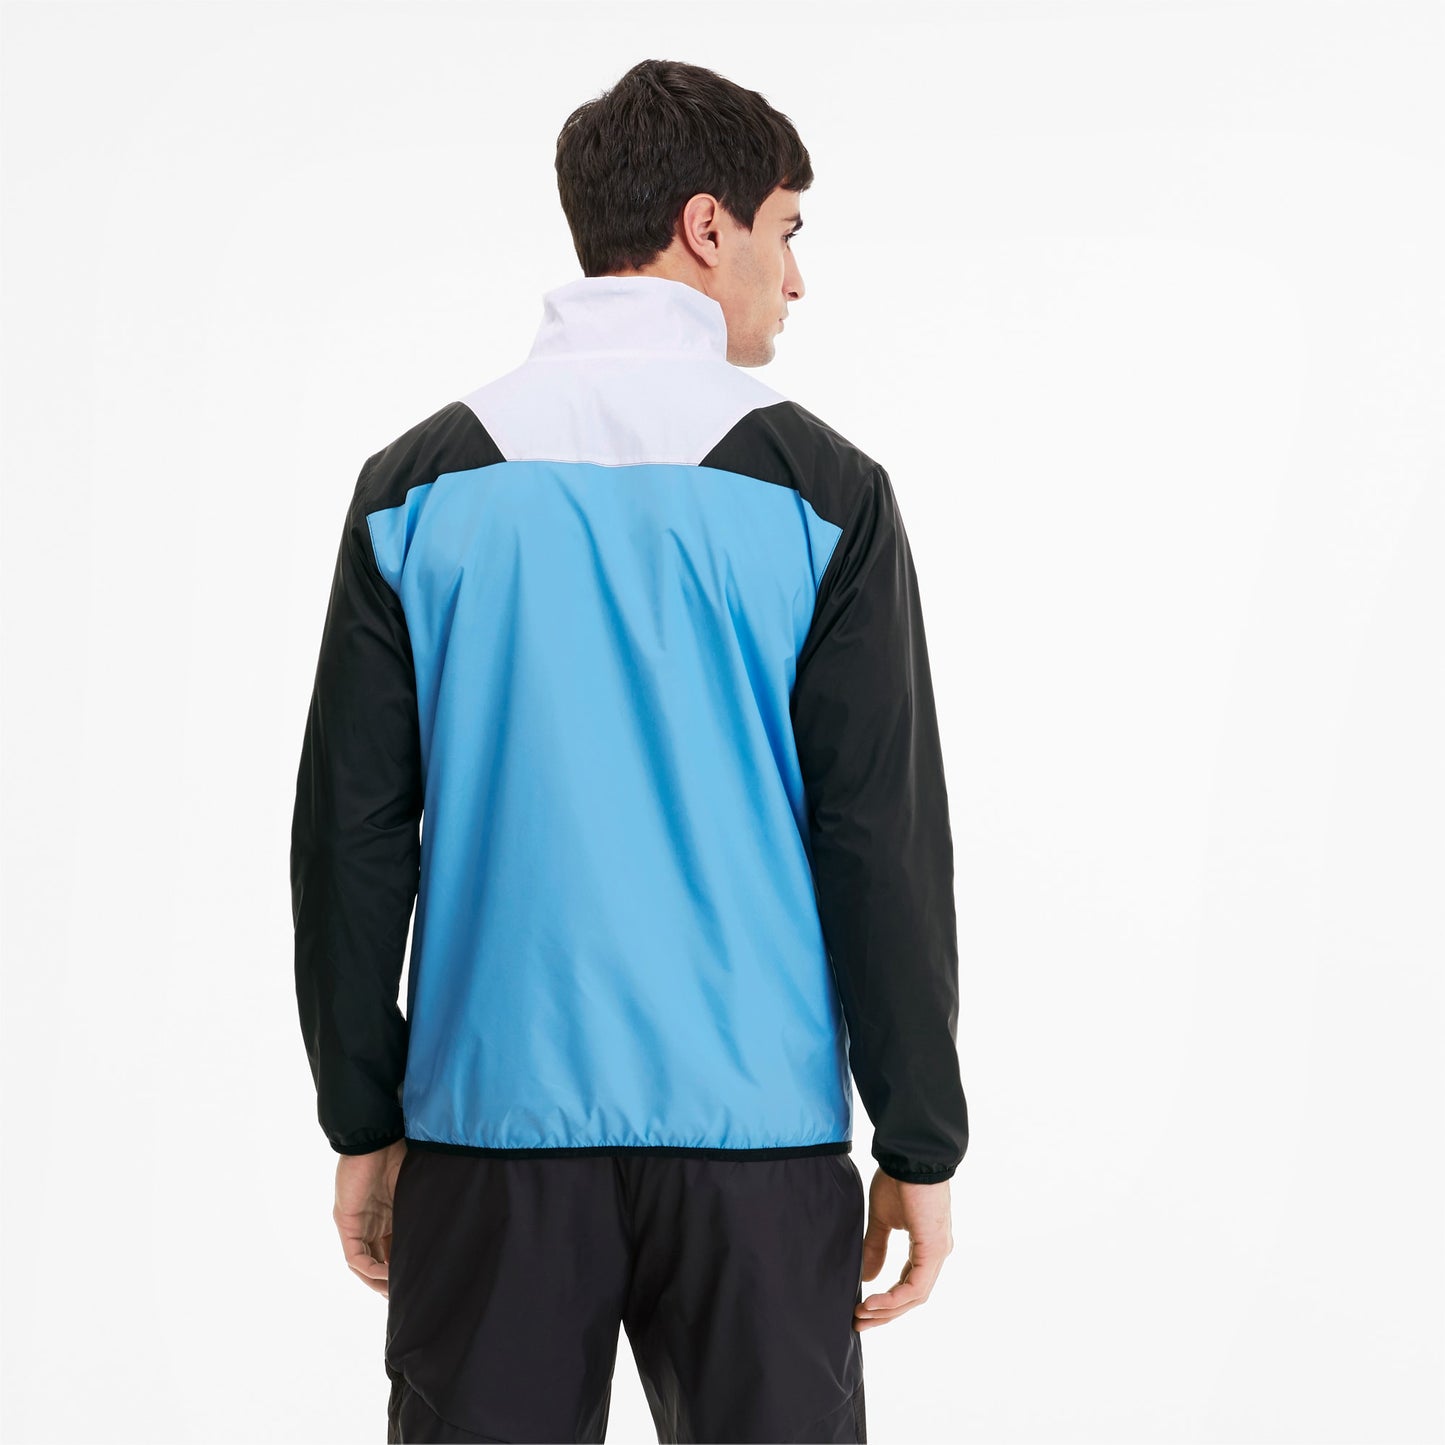 Puma Men's Reactive Woven Track Jacket Ethereal Blue-Black-White